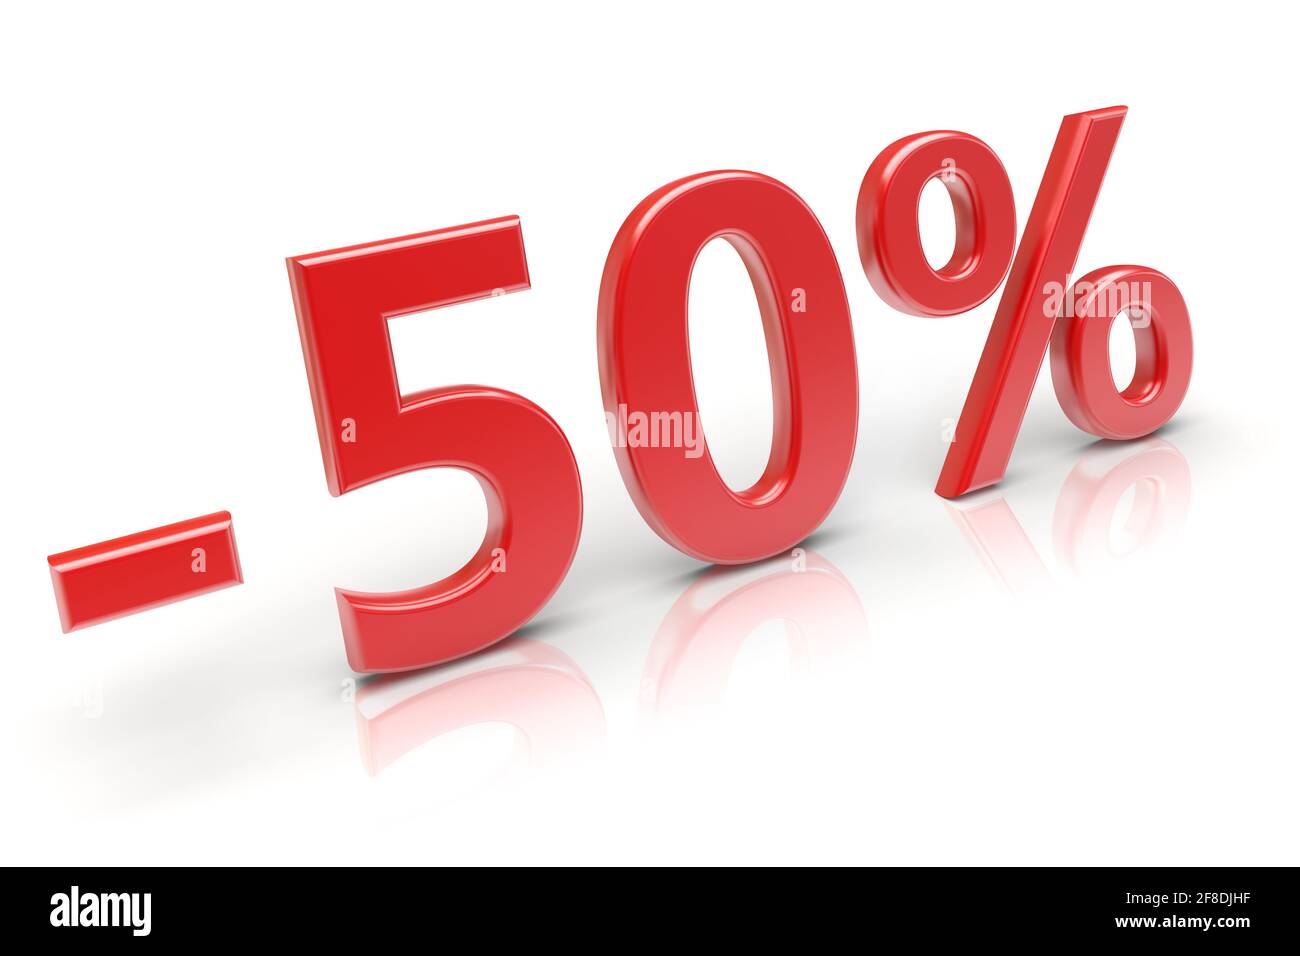 50 percent sale discount. 3d image Stock Photo